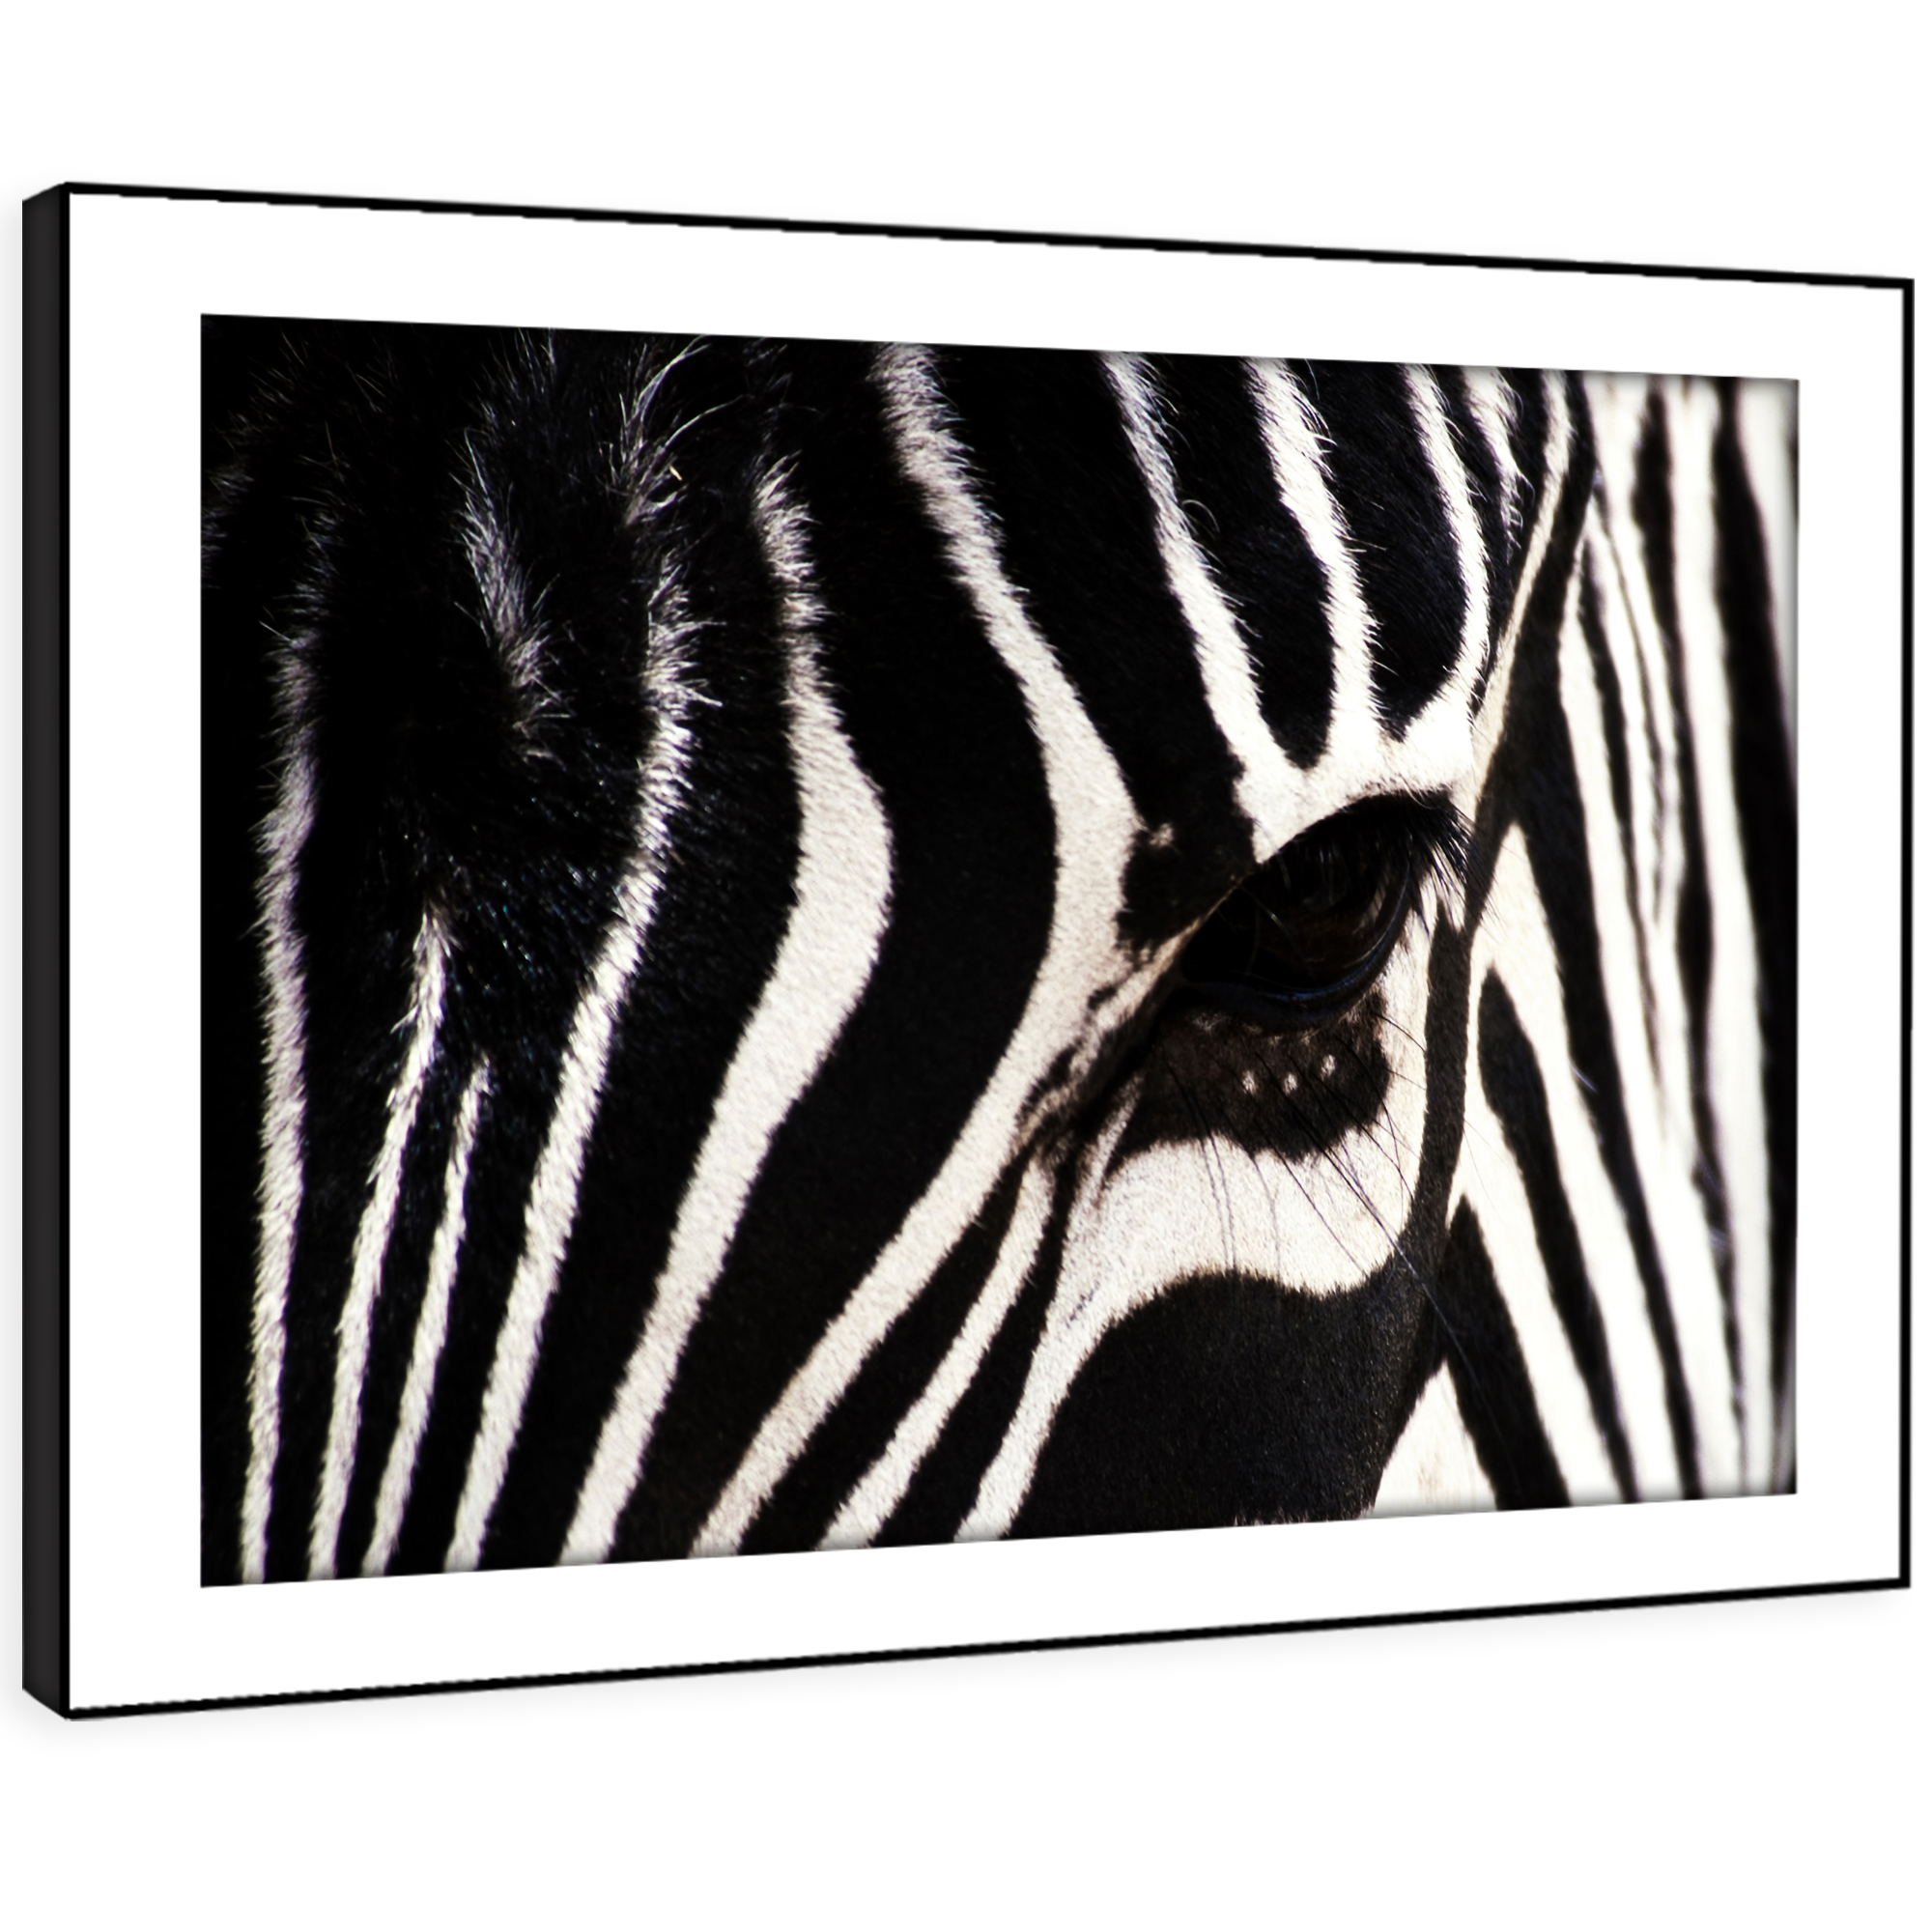 A058 Black White Zebra Stripes Funky Animal Framed Wall Art Large Picture Prints Ebay